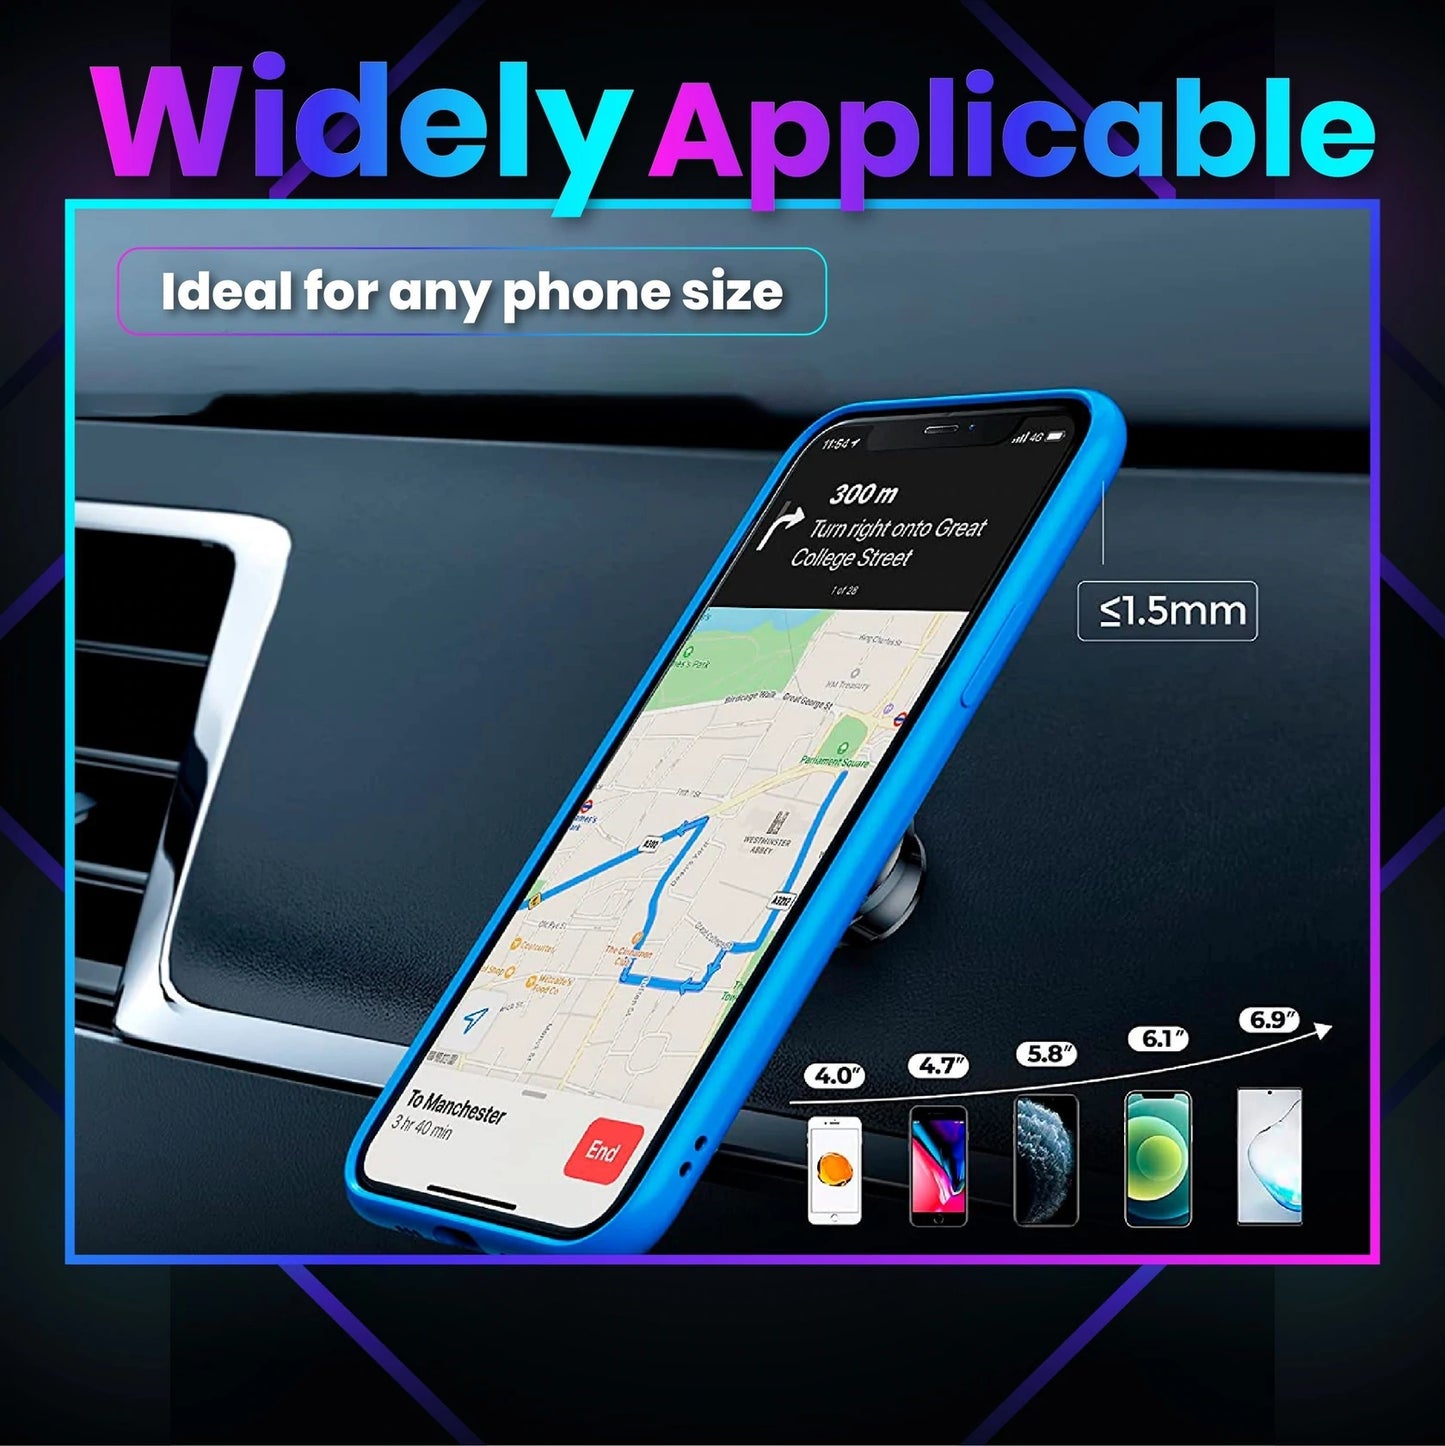 Universal Magnetic Flex Car Phone Holder[Clearance Sale]